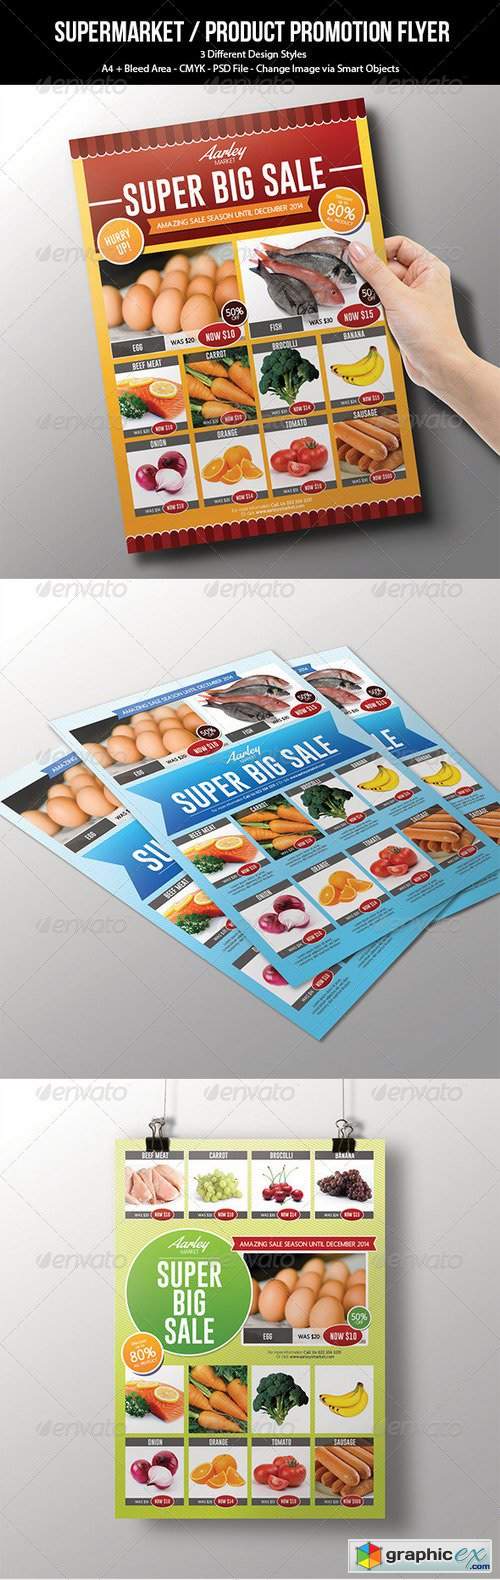 Supermarket / Product Promotion Flyer